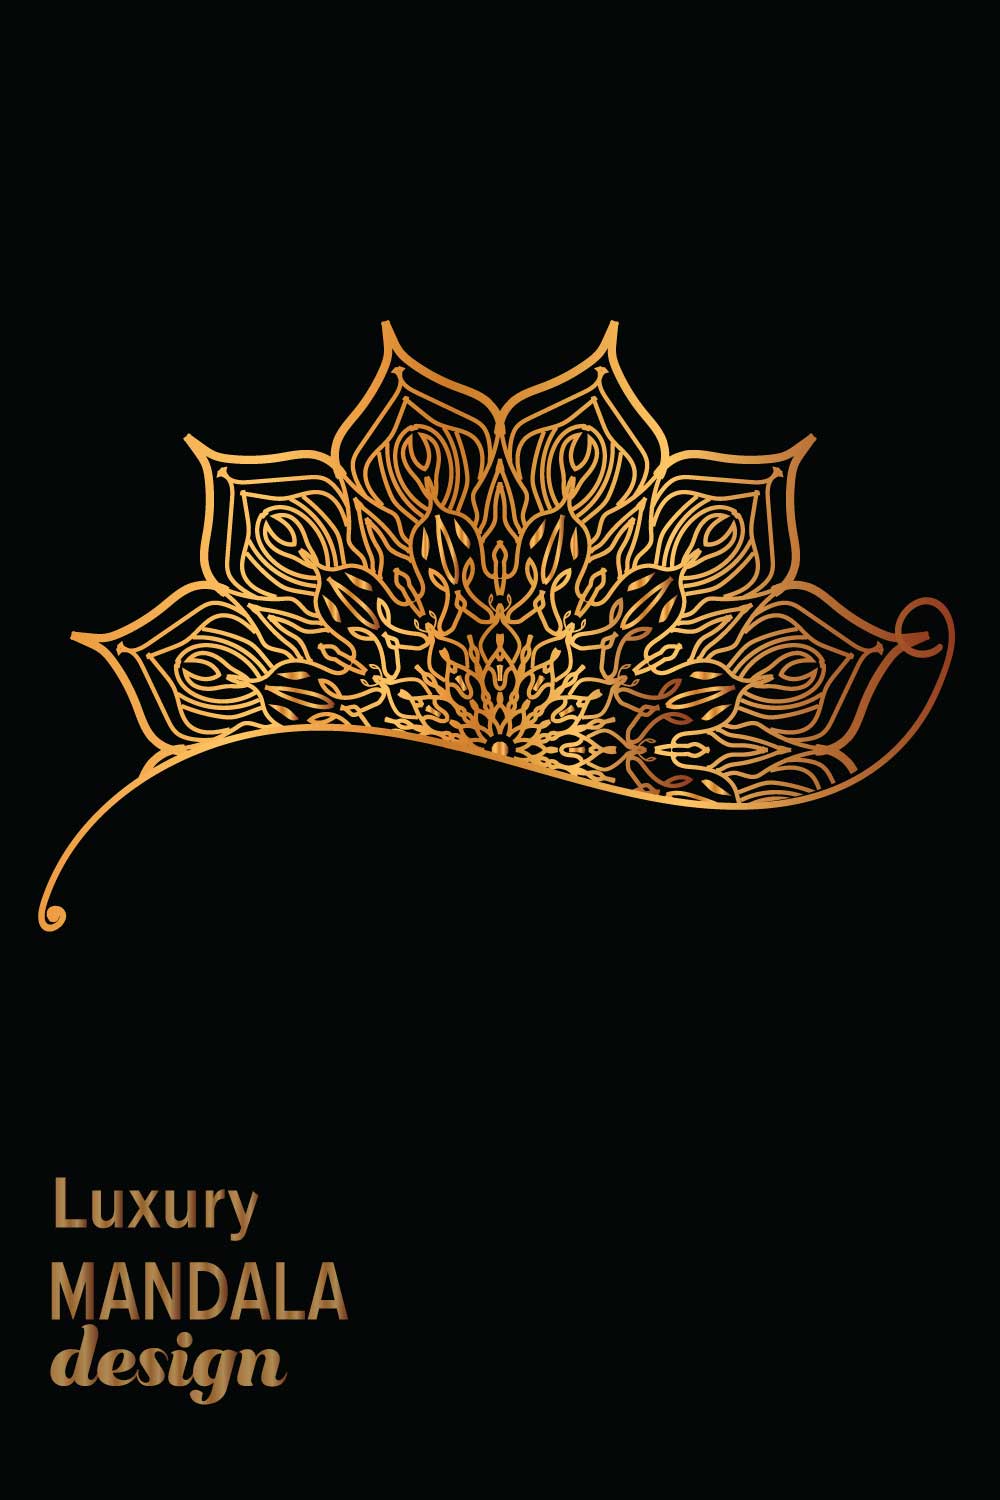 luxury mandala design pinterest preview image.